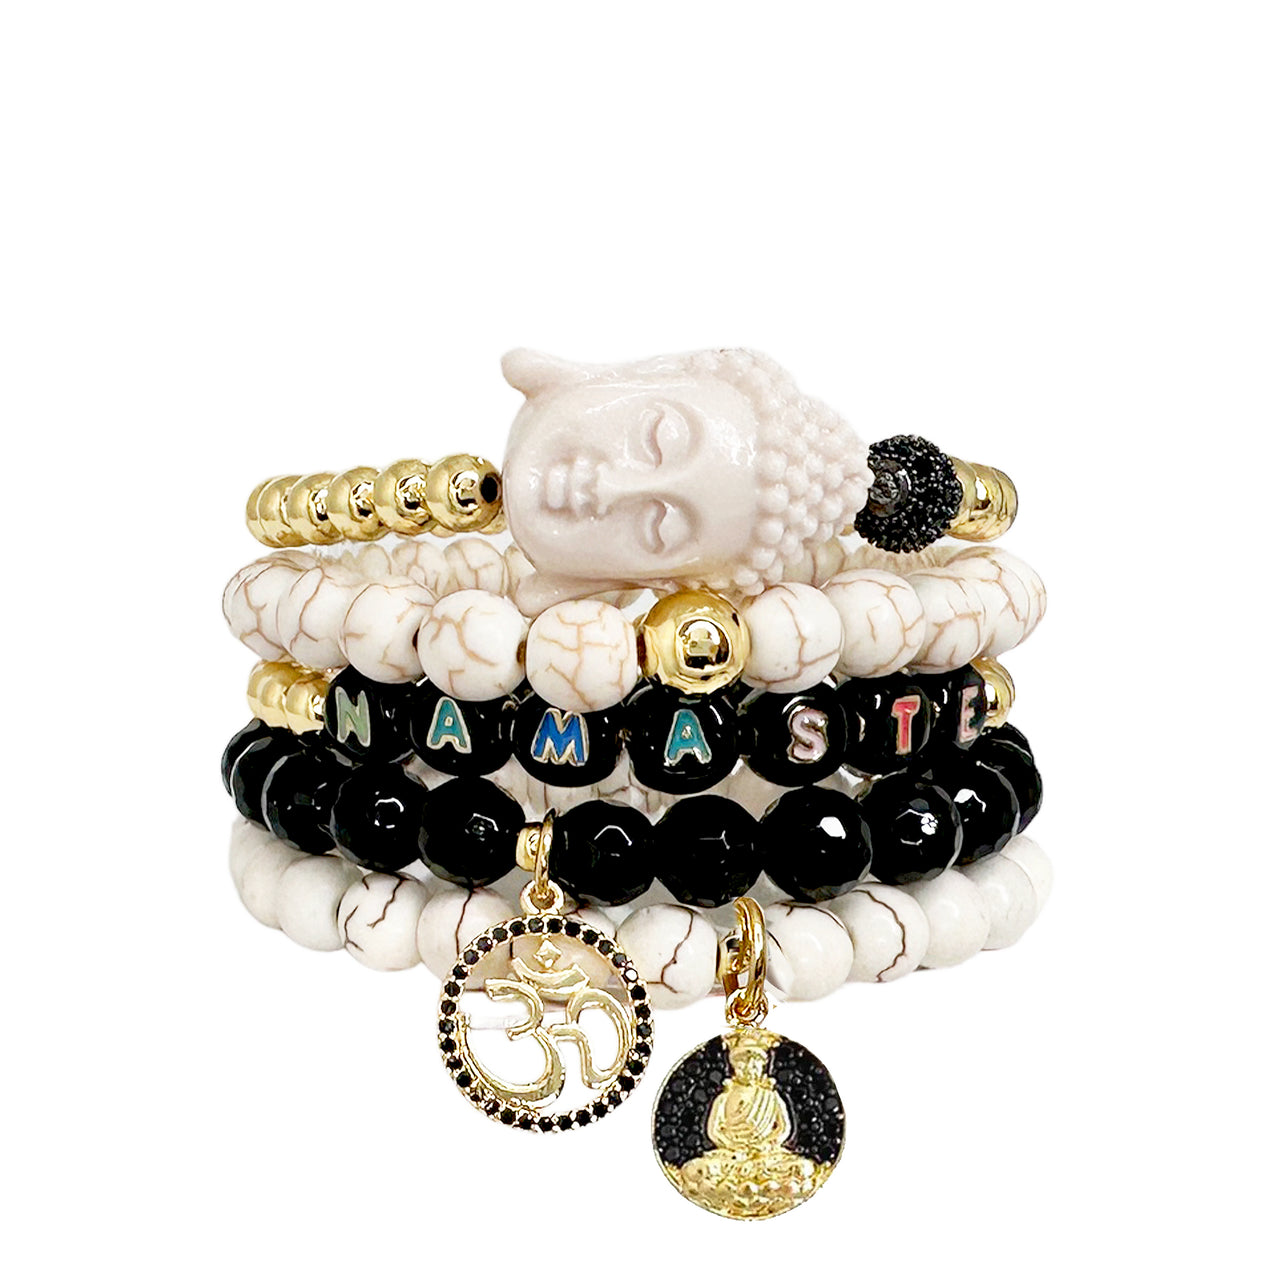 Teresa Namaste Bracelet Collection